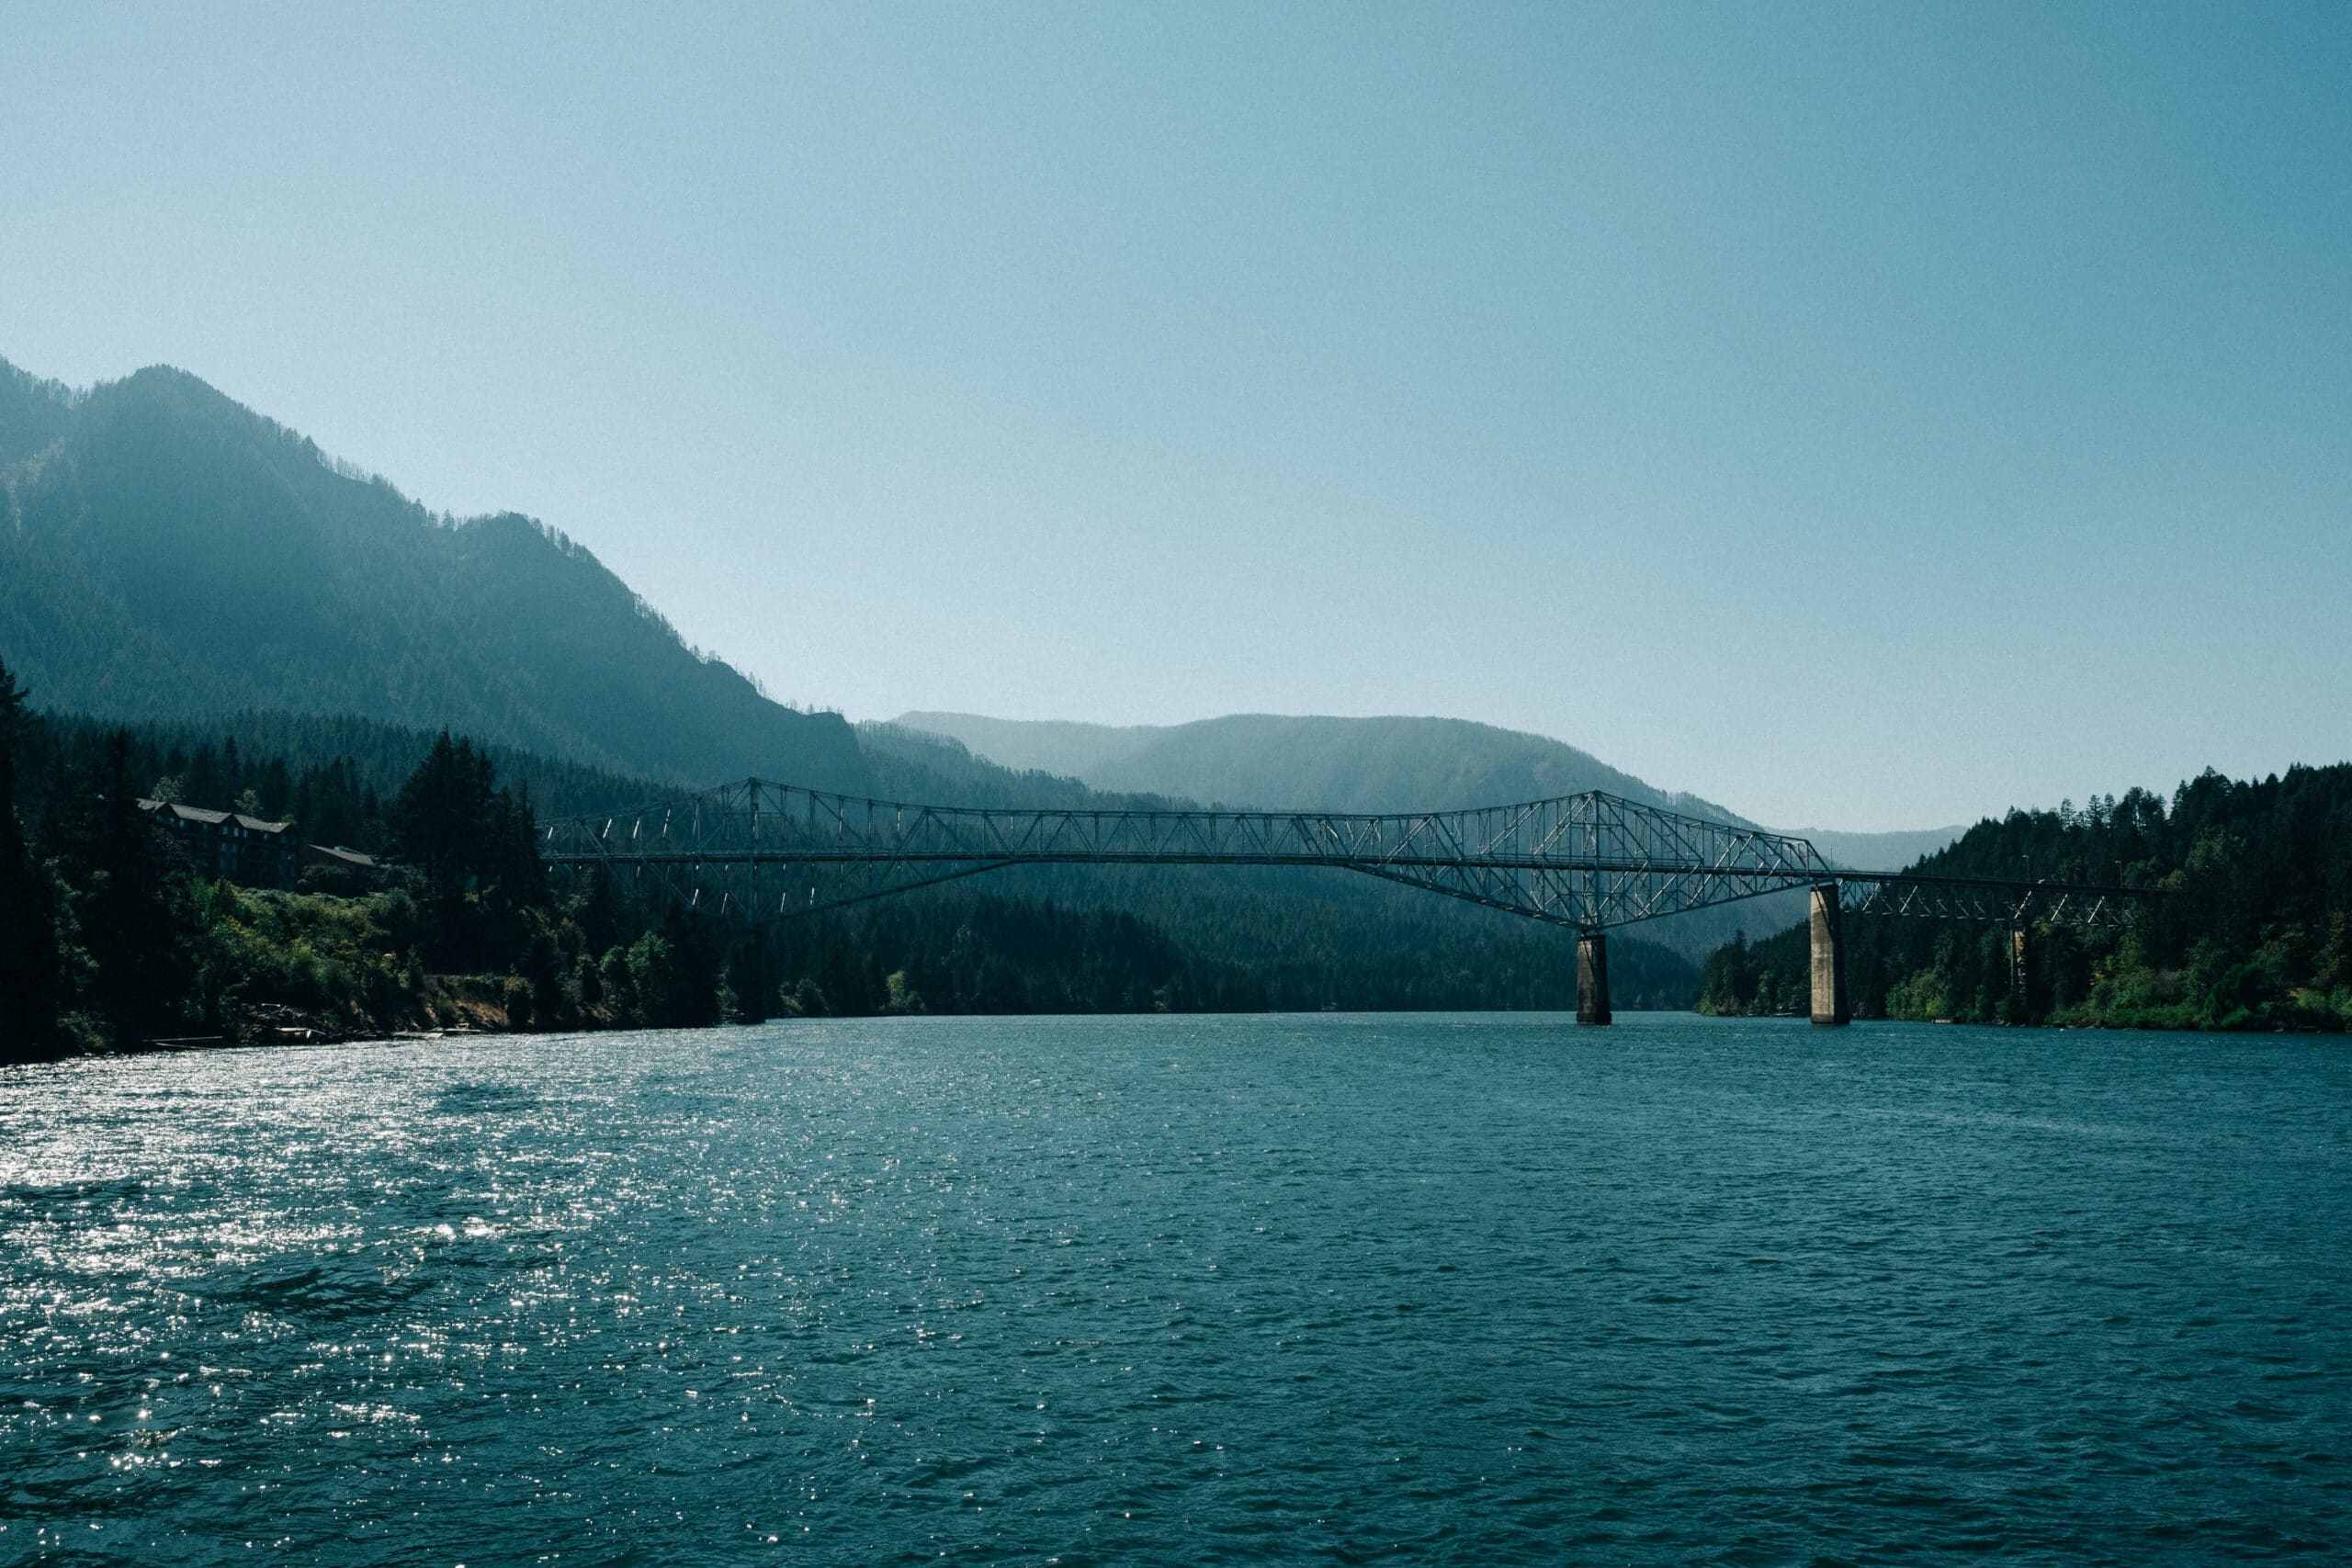 Bridge over water, Oregon